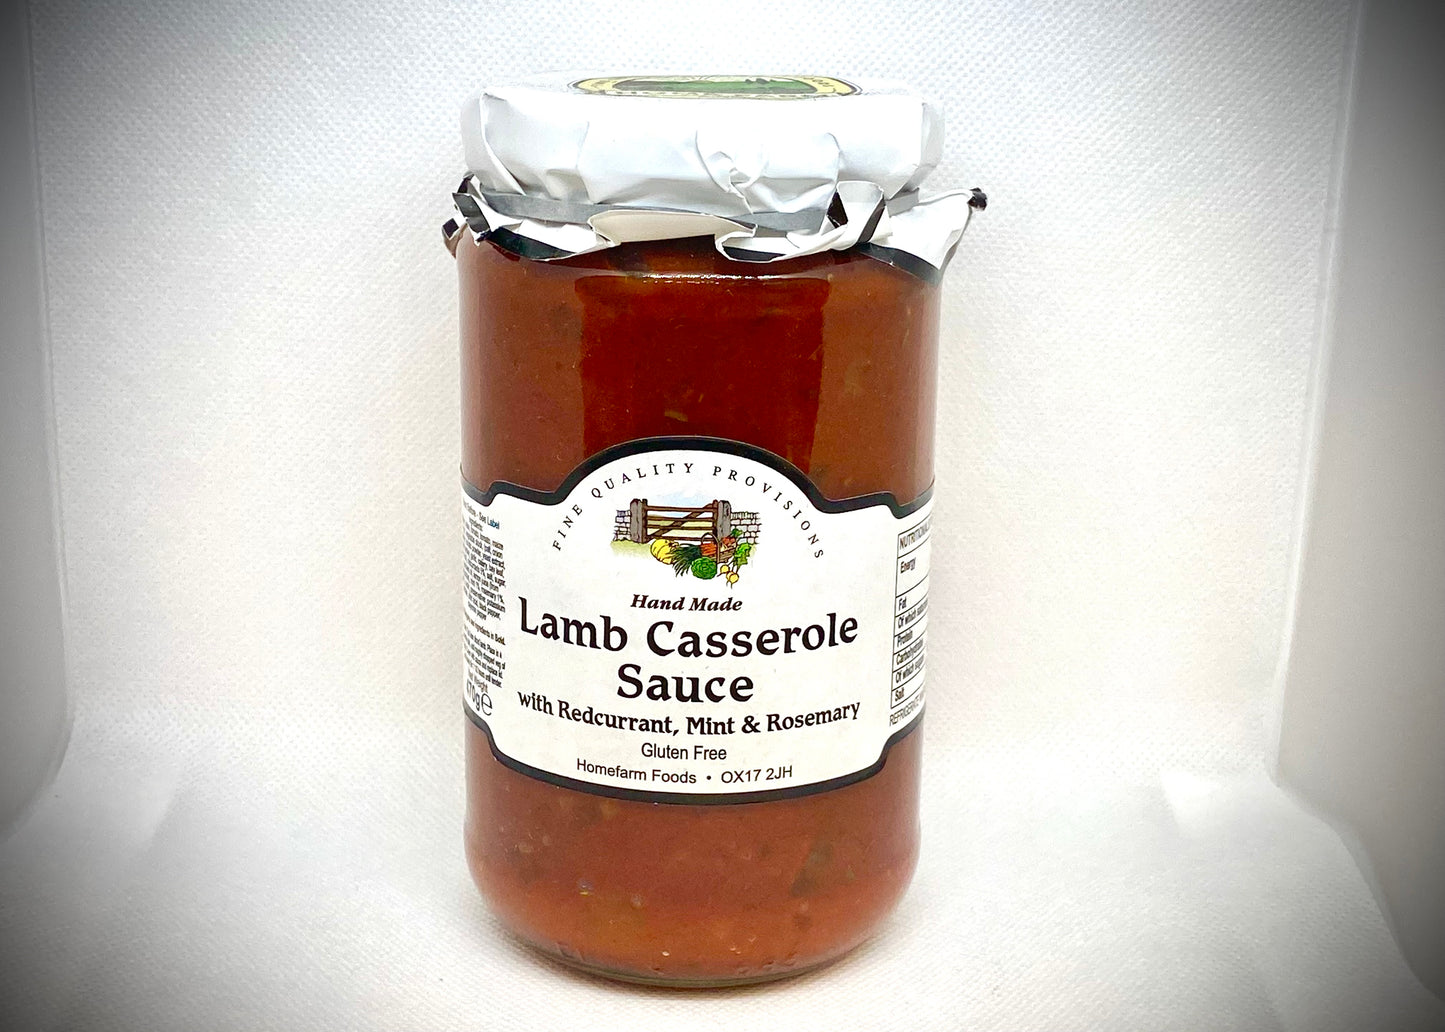 Lamb Casserole Sauce